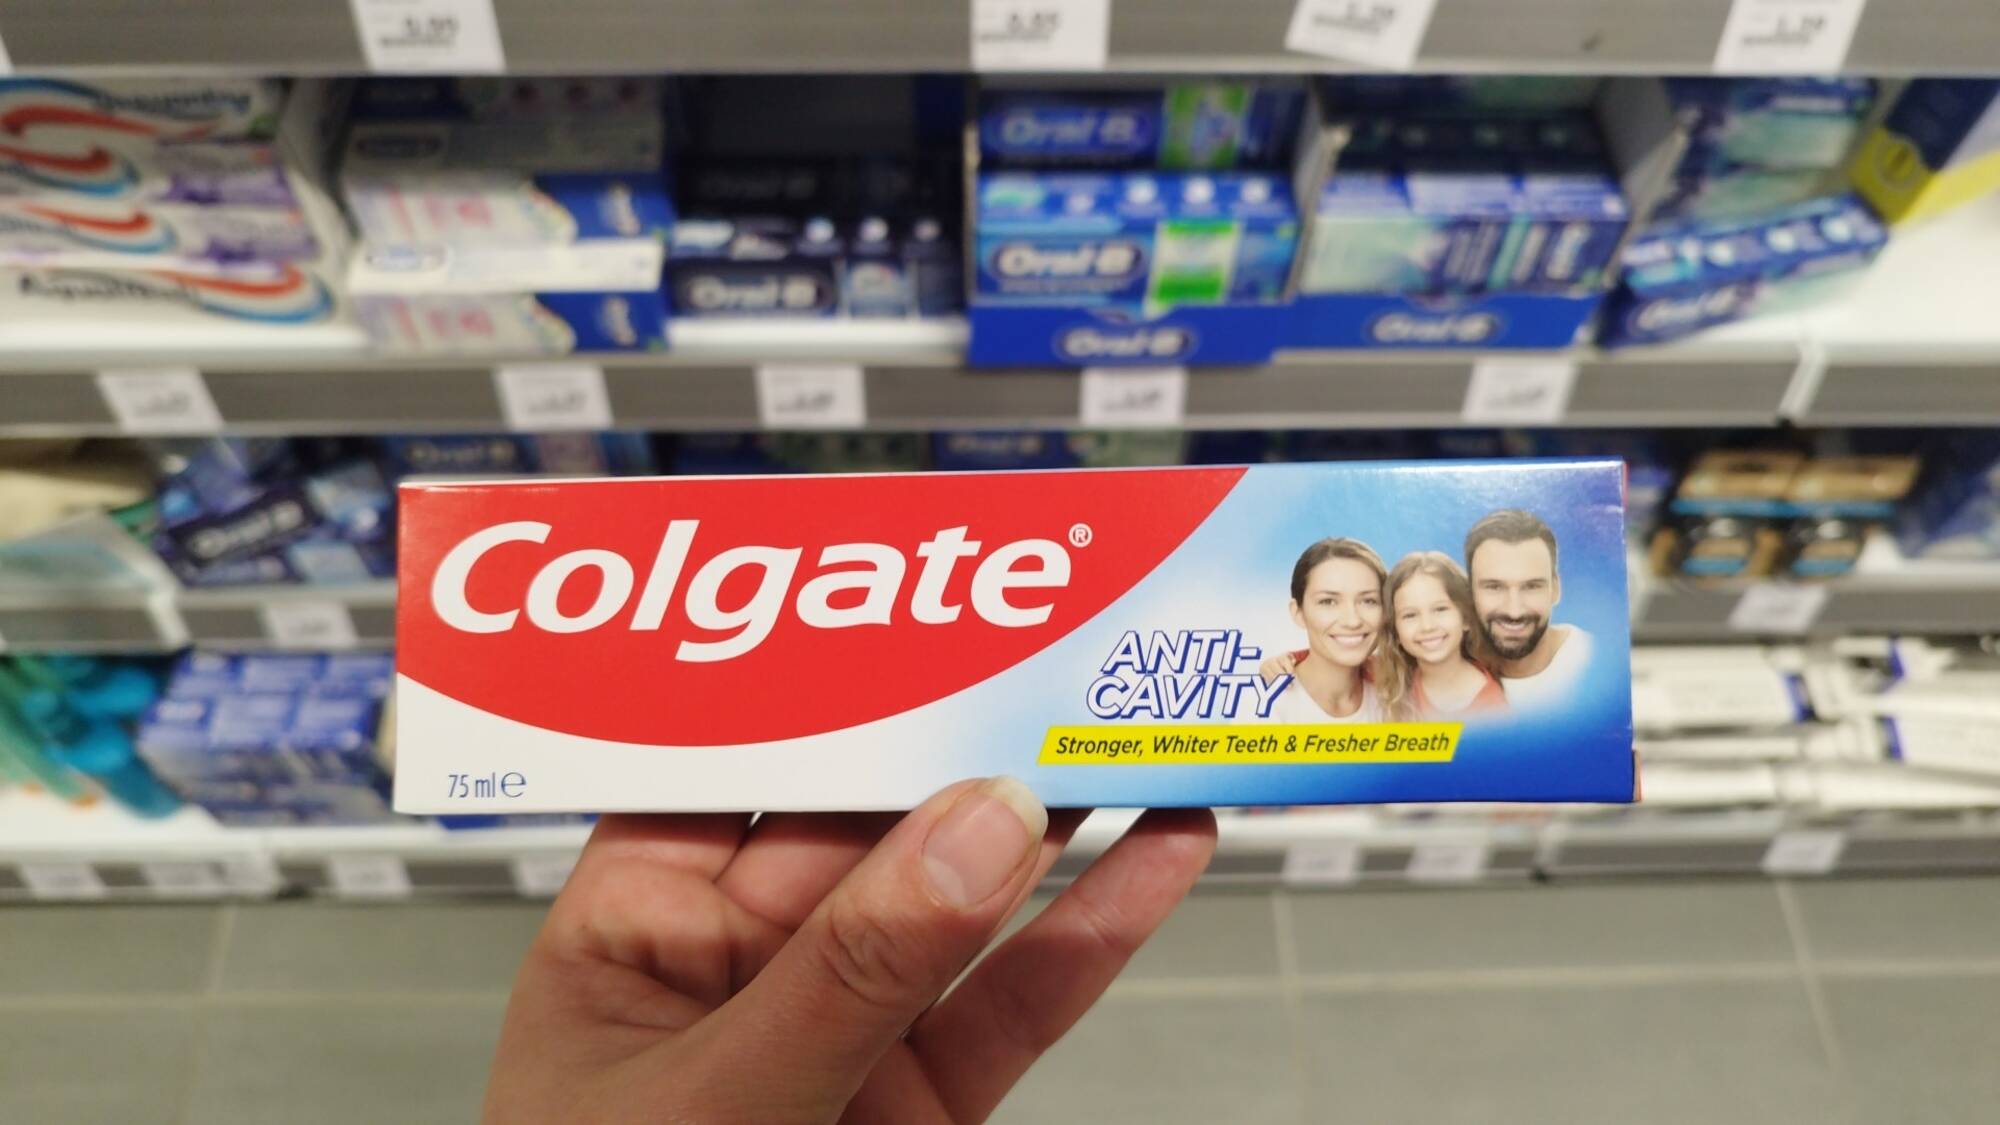 COLGATE - Dentifrice anti-cavity